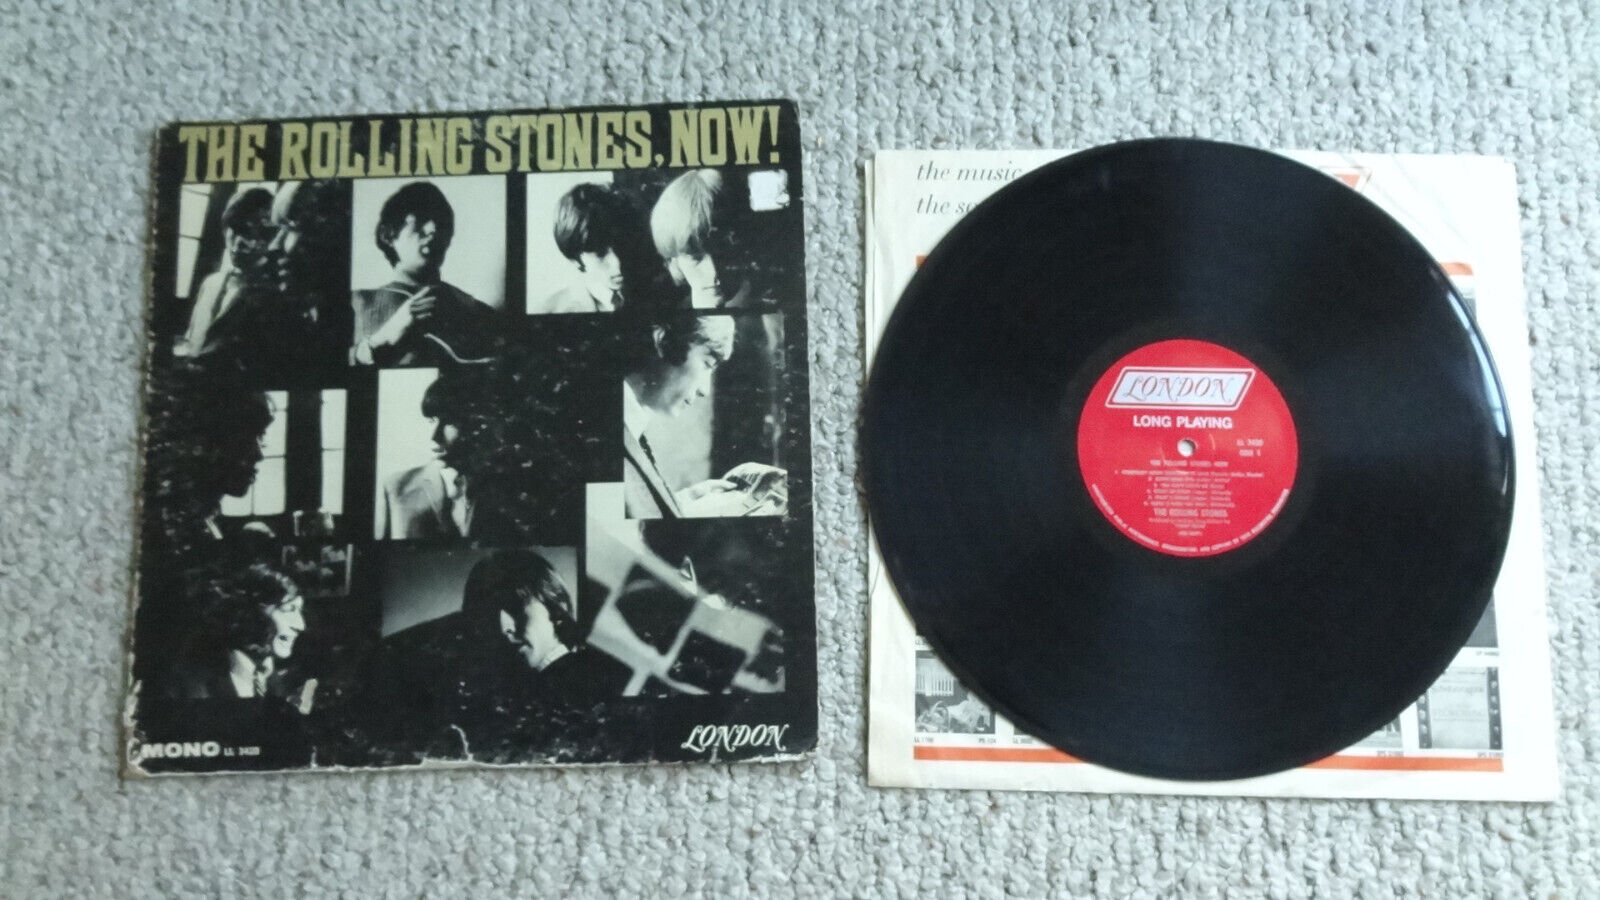 The Rolling Stones Now LP Record Vinyl London LL 3420 Album 1964 MONO